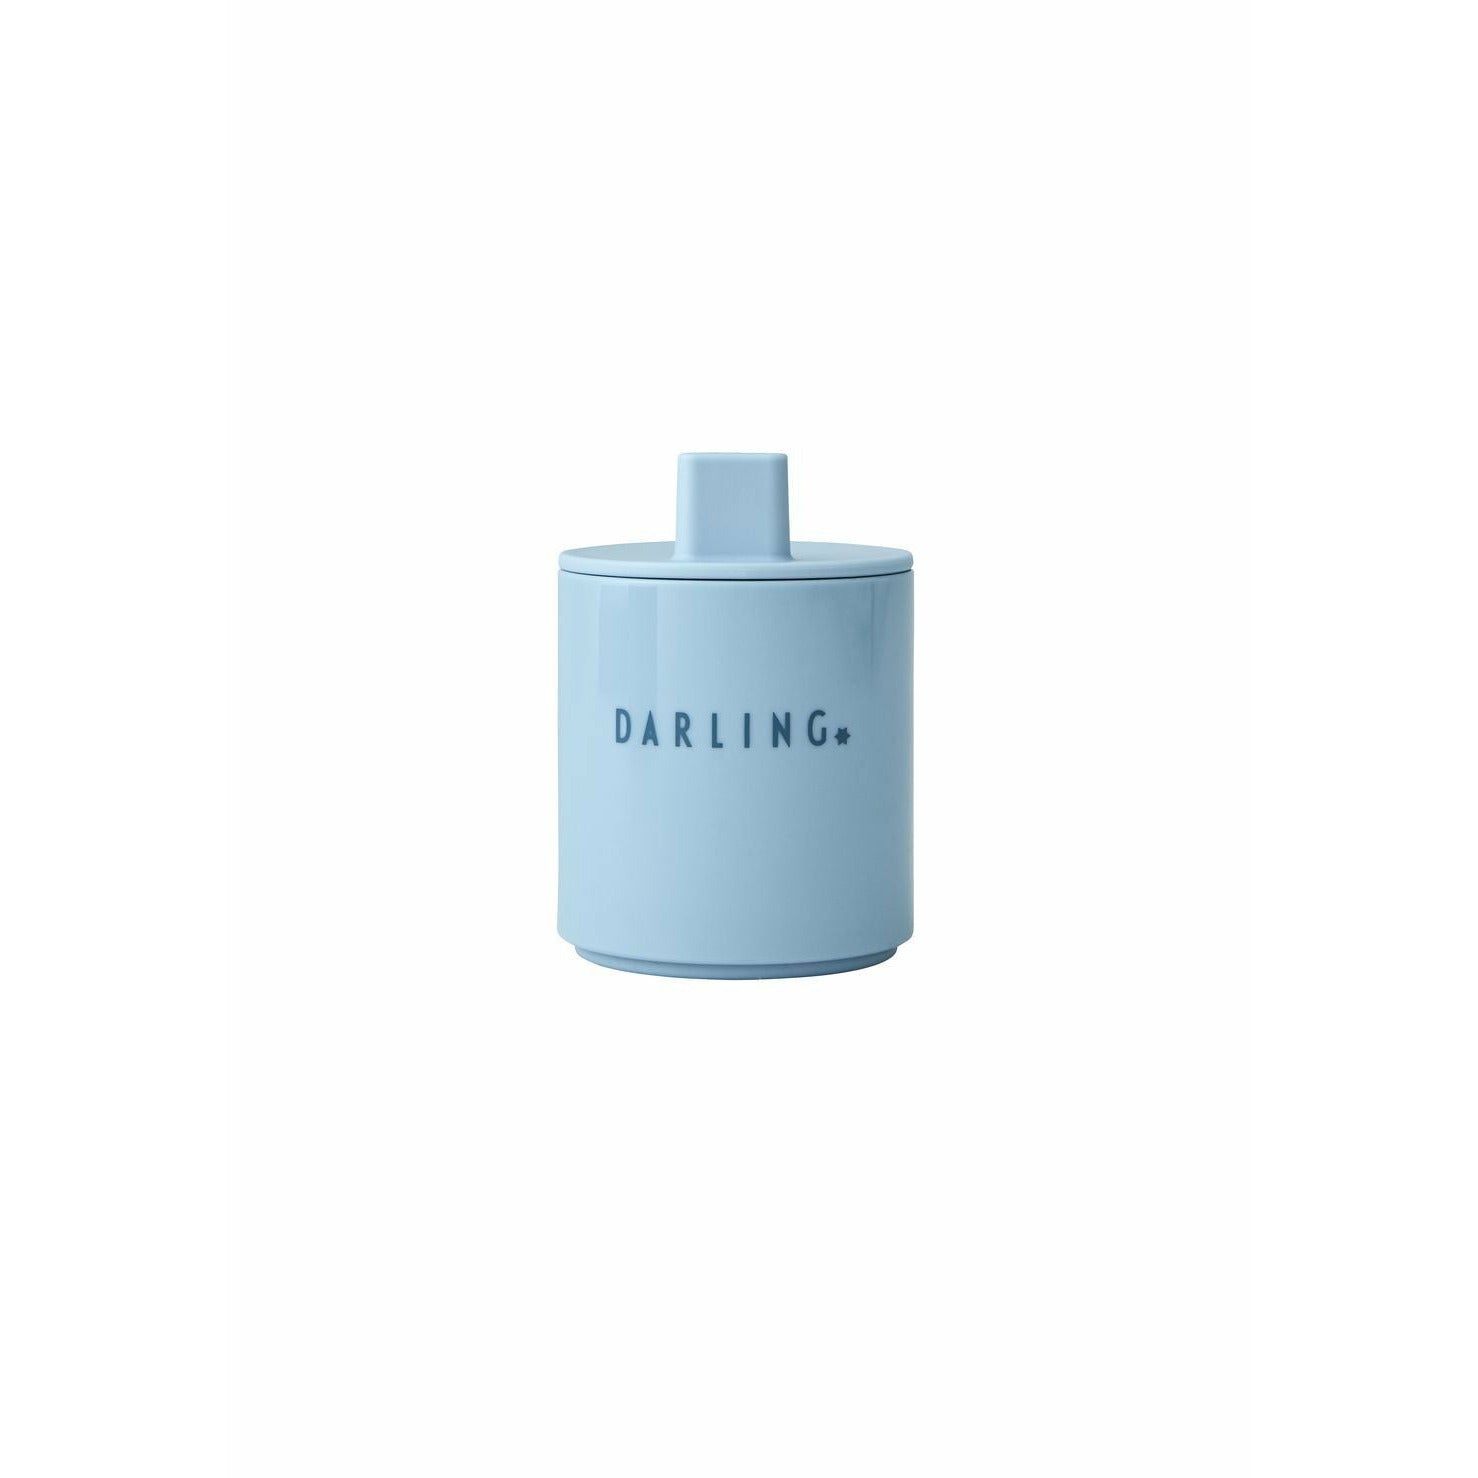 Letras de diseño mini taza favorita azul claro, cariño